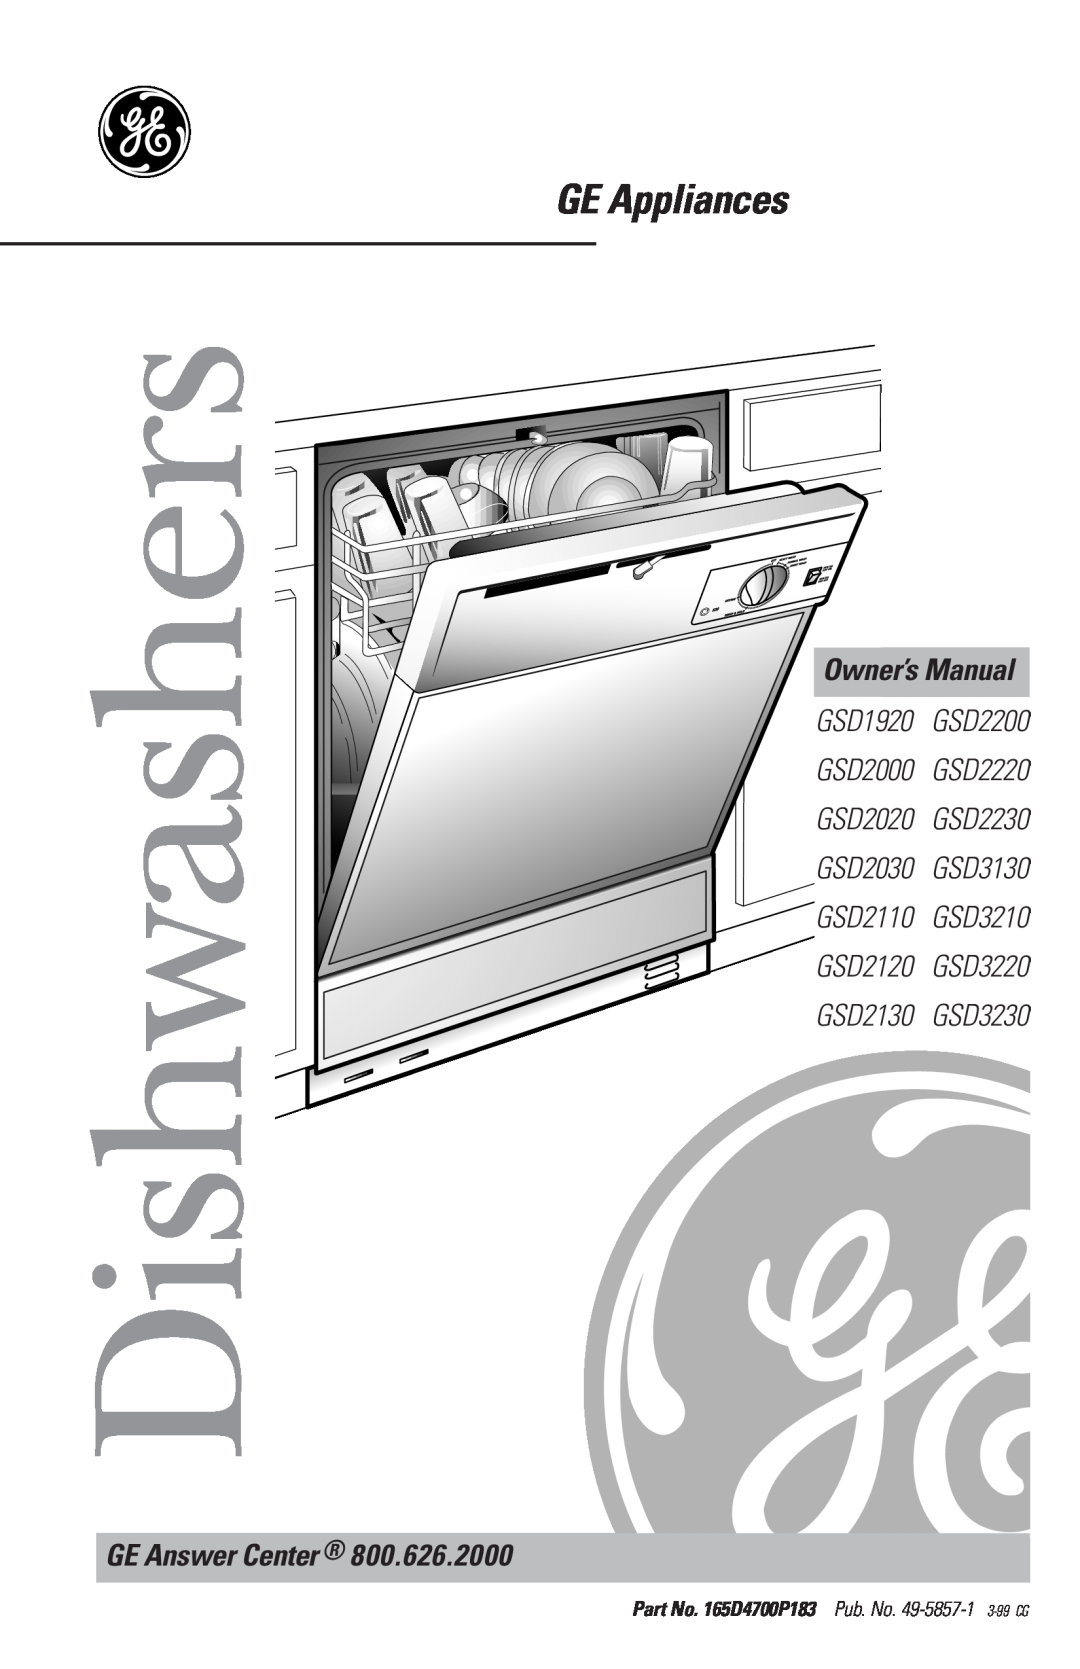 GE GSD2130 owner manual GE Appliances, GE Answer Center, Dishwashers, Part No. 165D4700P183 Pub. No. 49-5857 7-98CG 